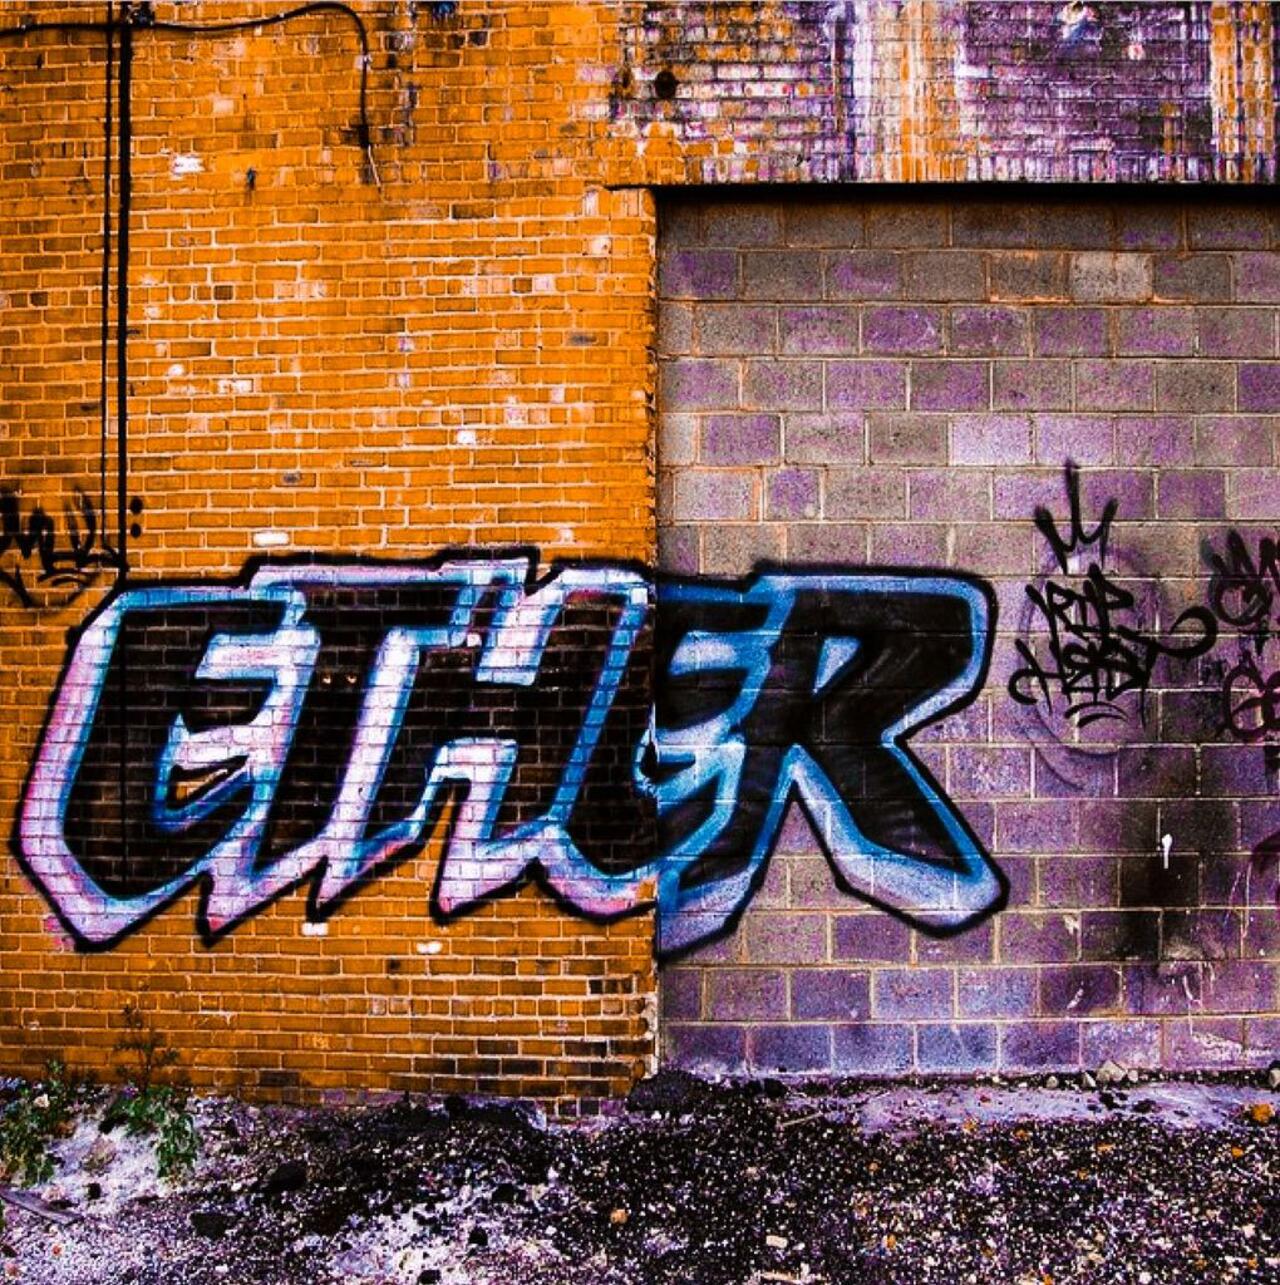 Ether | photo by @adogiaq #art #photography #urban #graffiti #streetart https://t.co/aY0nifJ6Ps